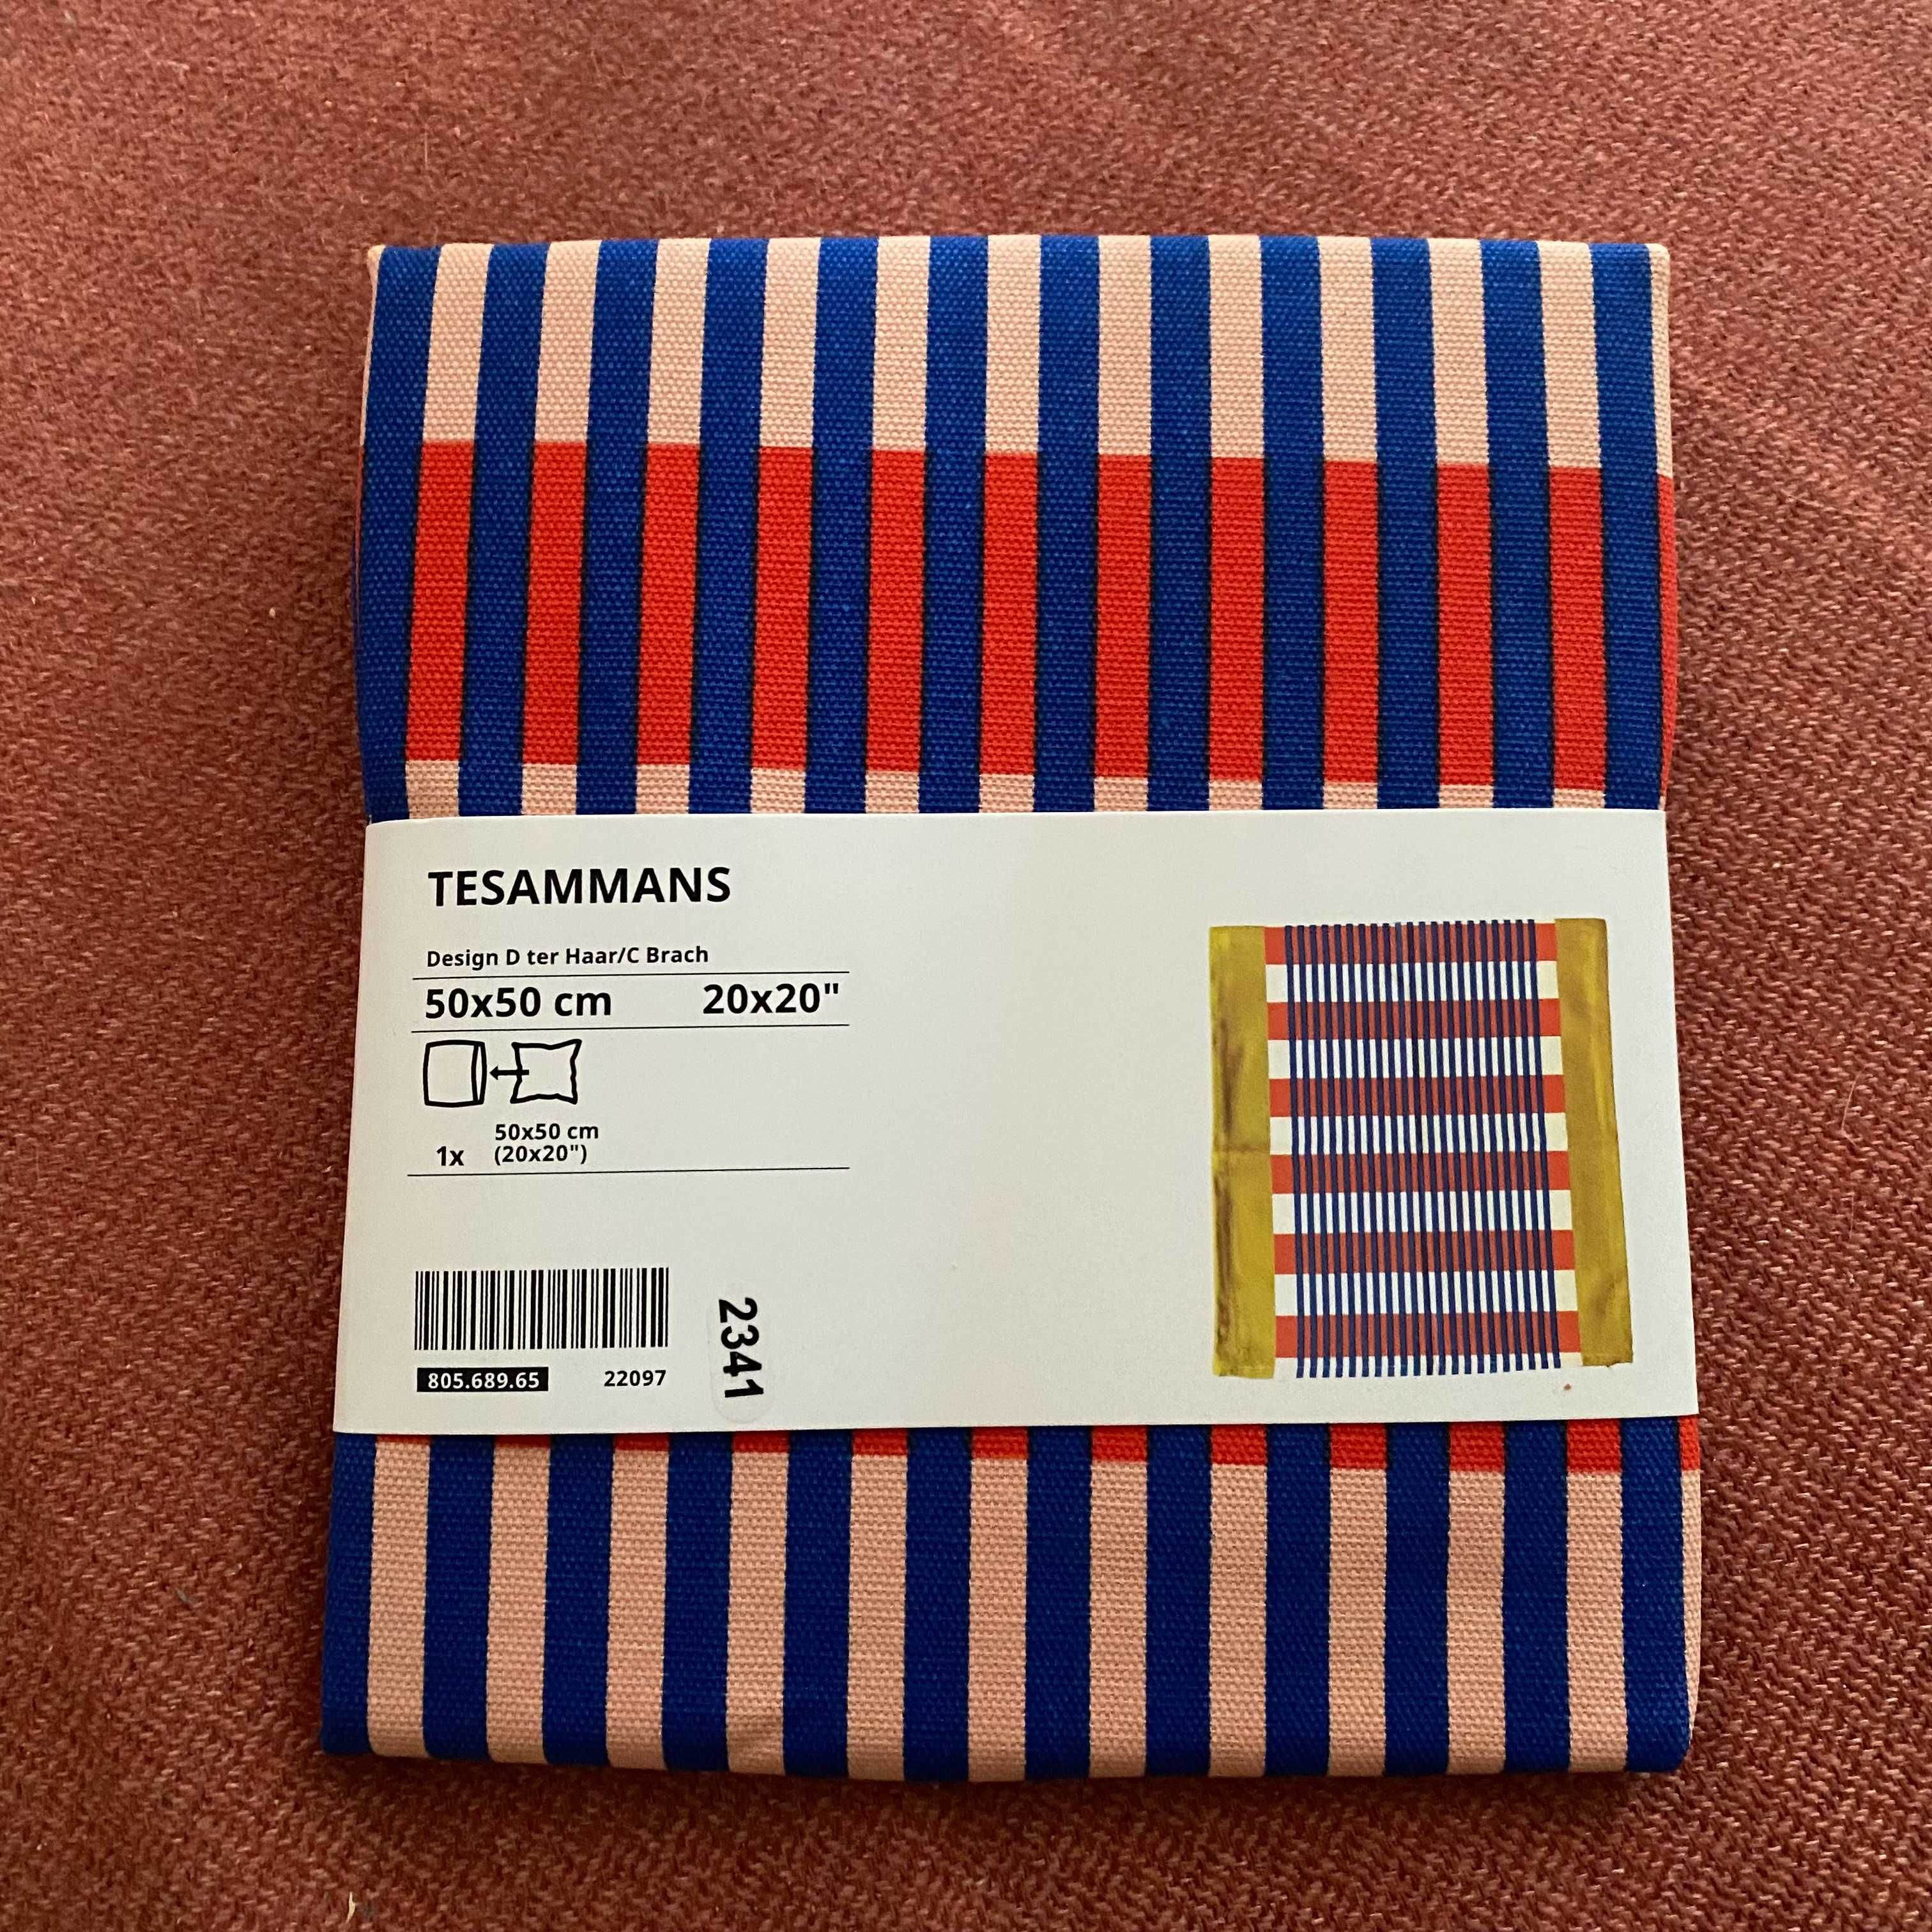 Poszewka Tessammans 50x50 Ikea dekoracja nowa Raw Color